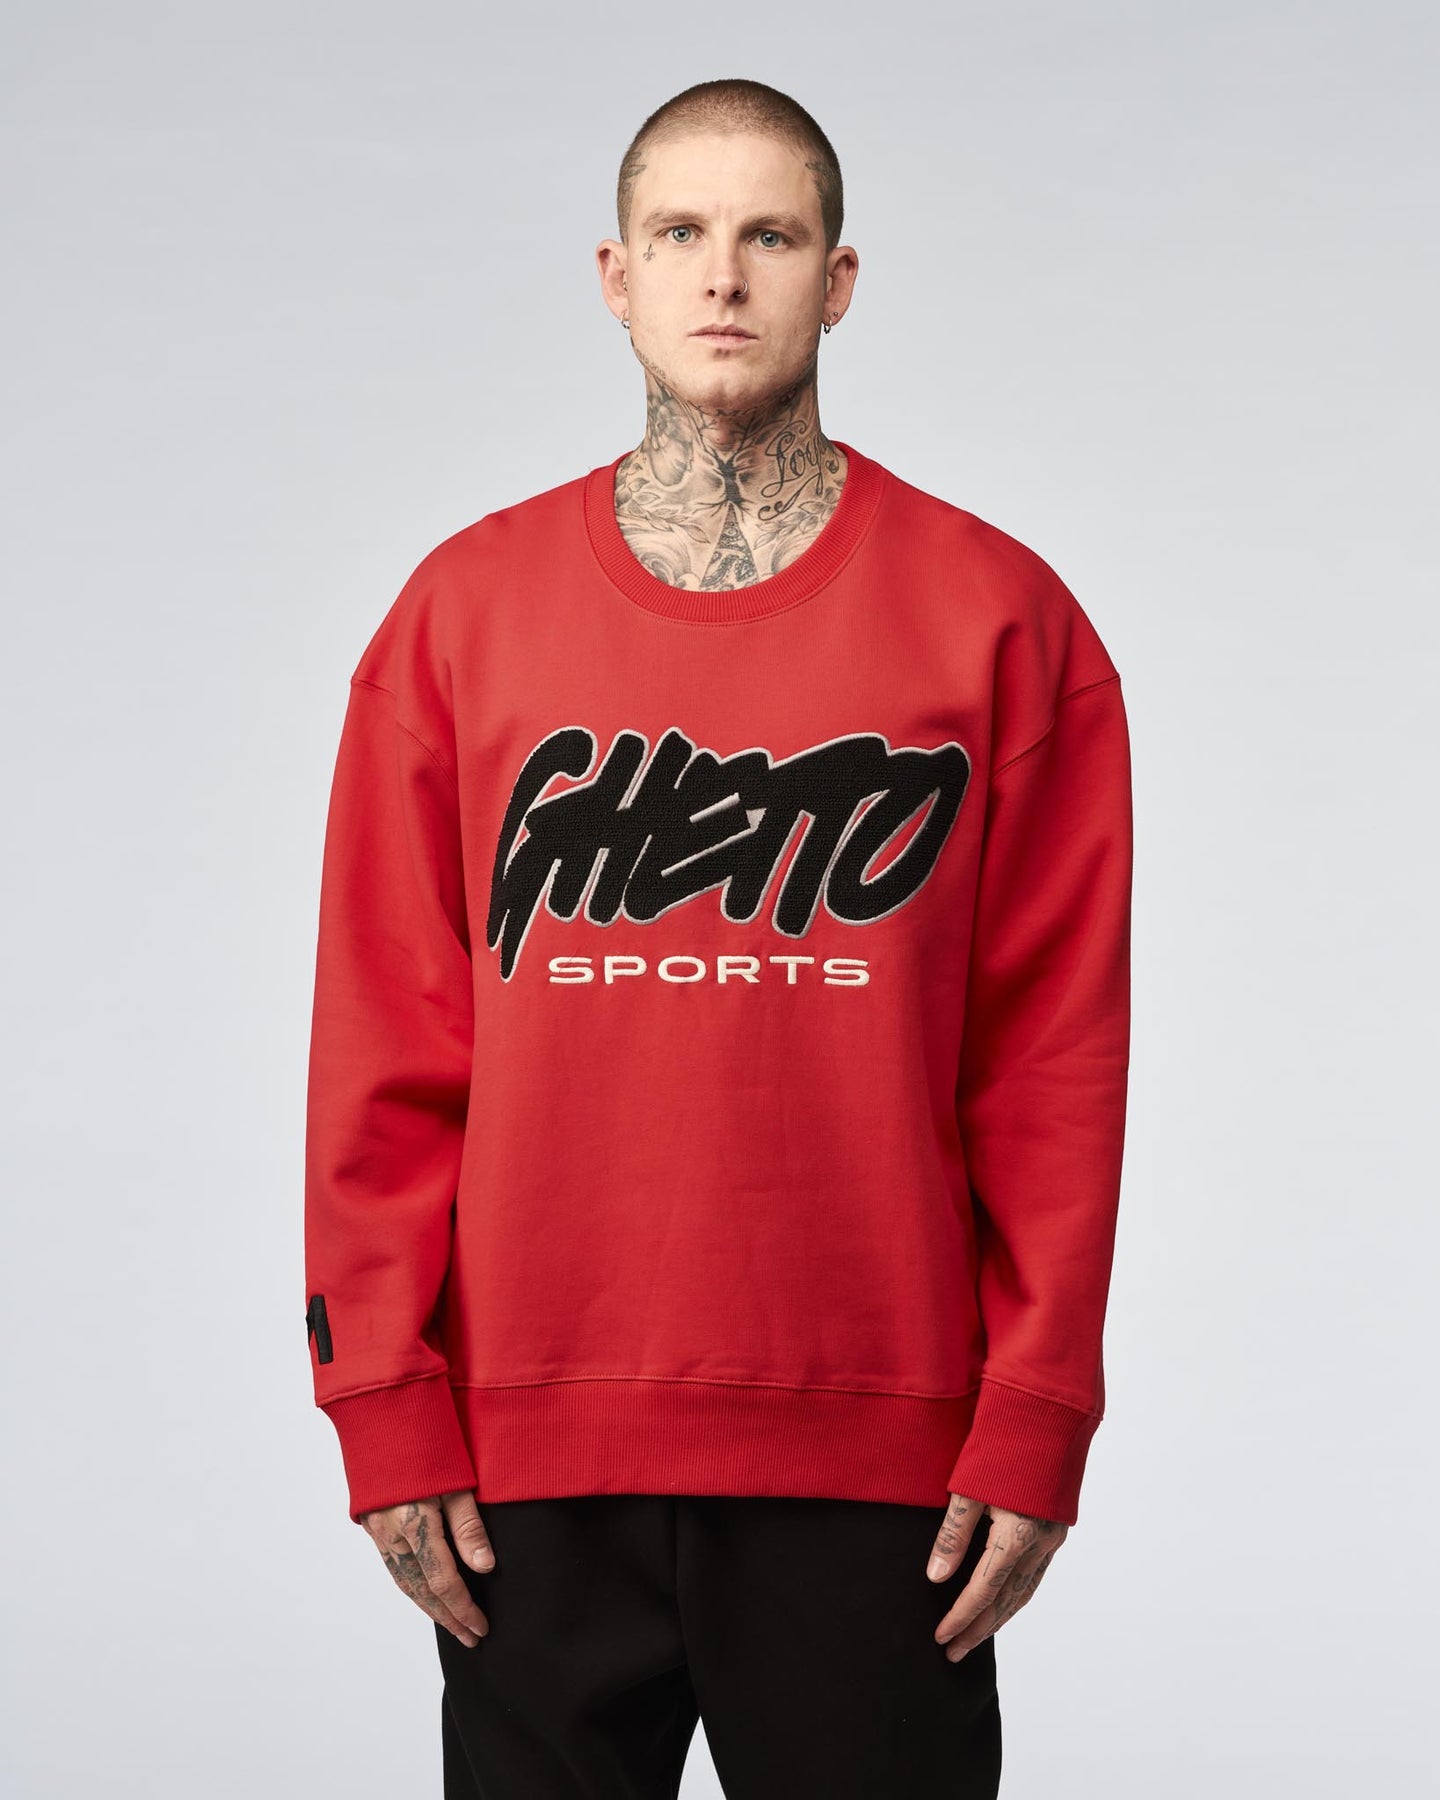 Ghetto Sports Towel Logo Sweater Red#N#– Maskulin.de Shop